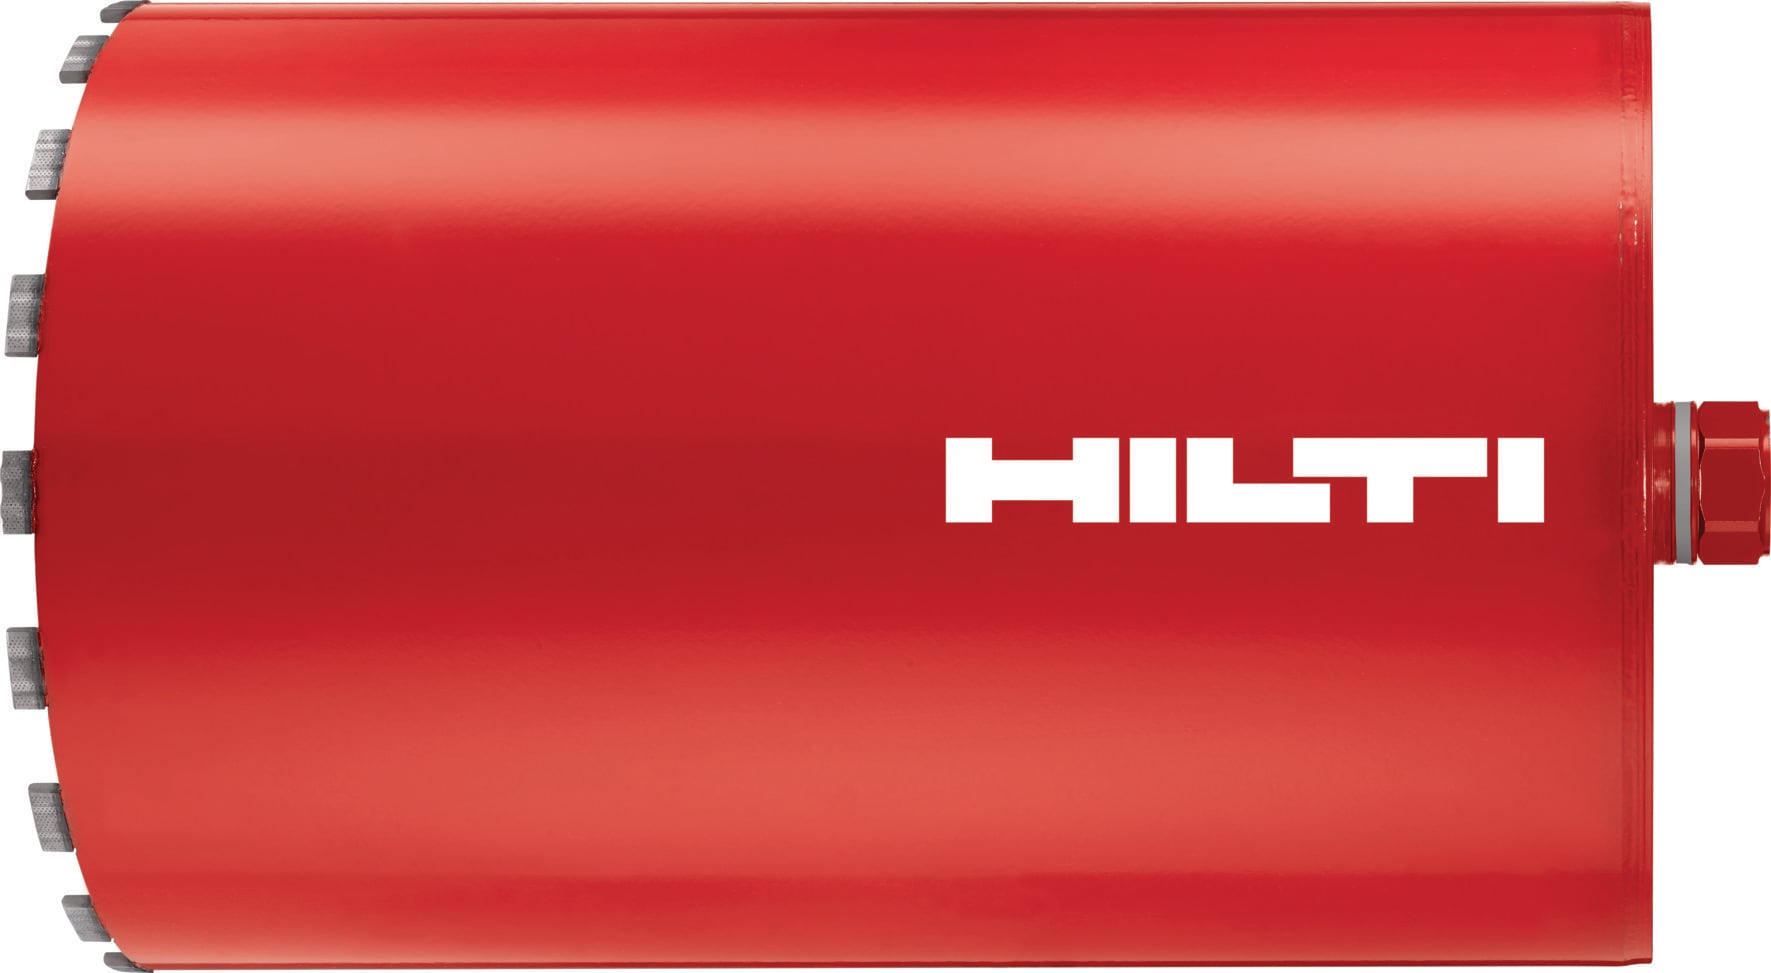 HILTI ヒルティ Core bit C-rod 82/430 SPX-L ダイヤモンドコアビット 3610263 ドライバー、レンチ